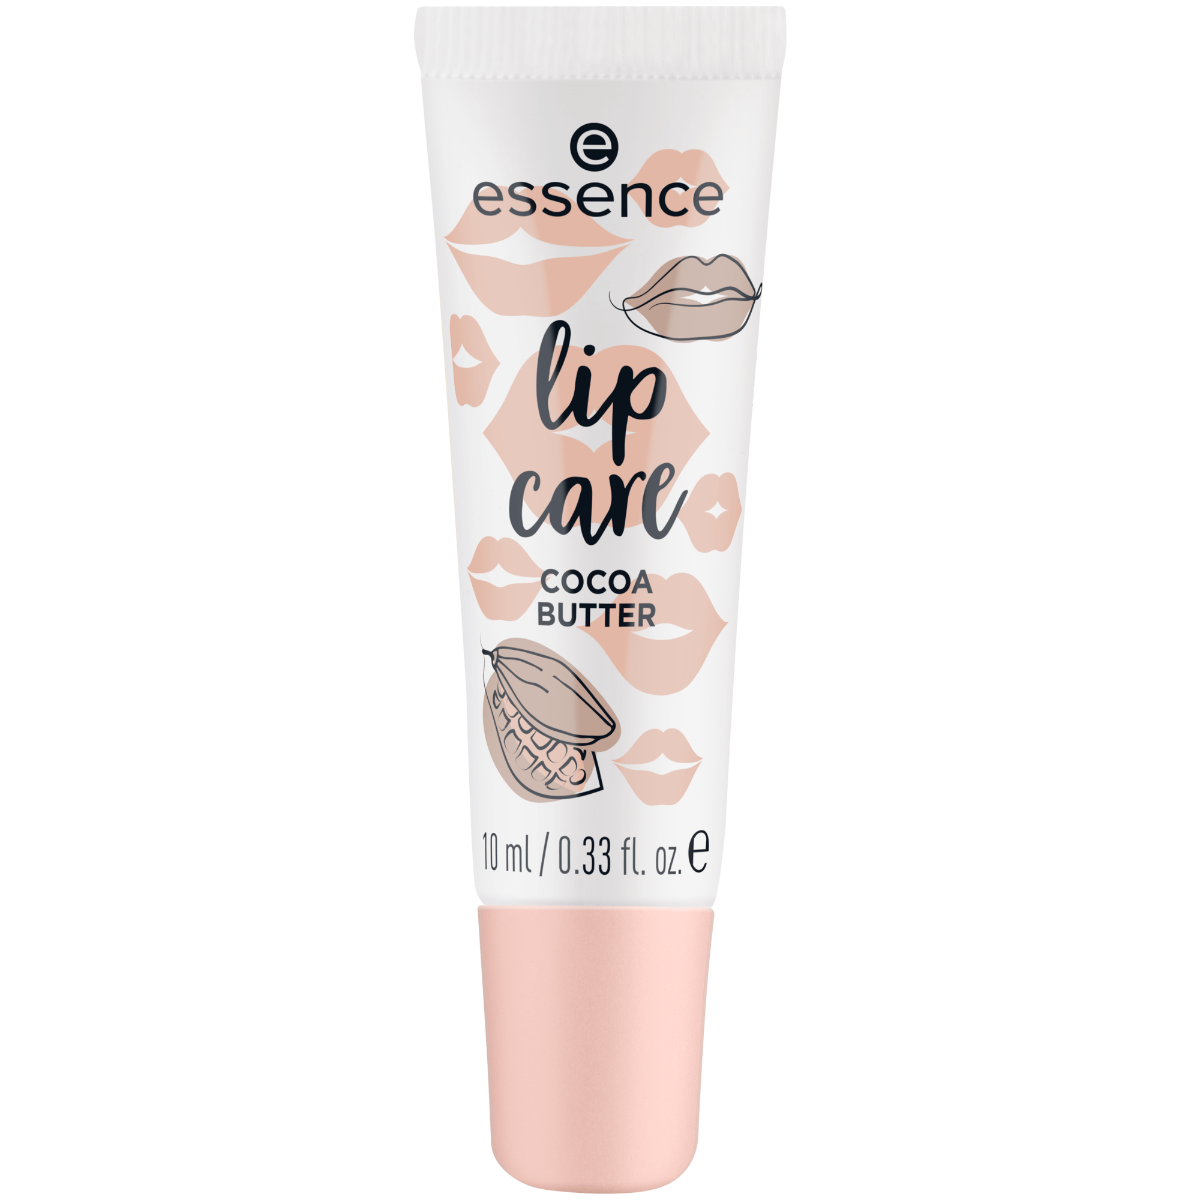 Бальзам для губ Essence Lip Care, 10 мл сыворотка для губ essence lip care 10 мл